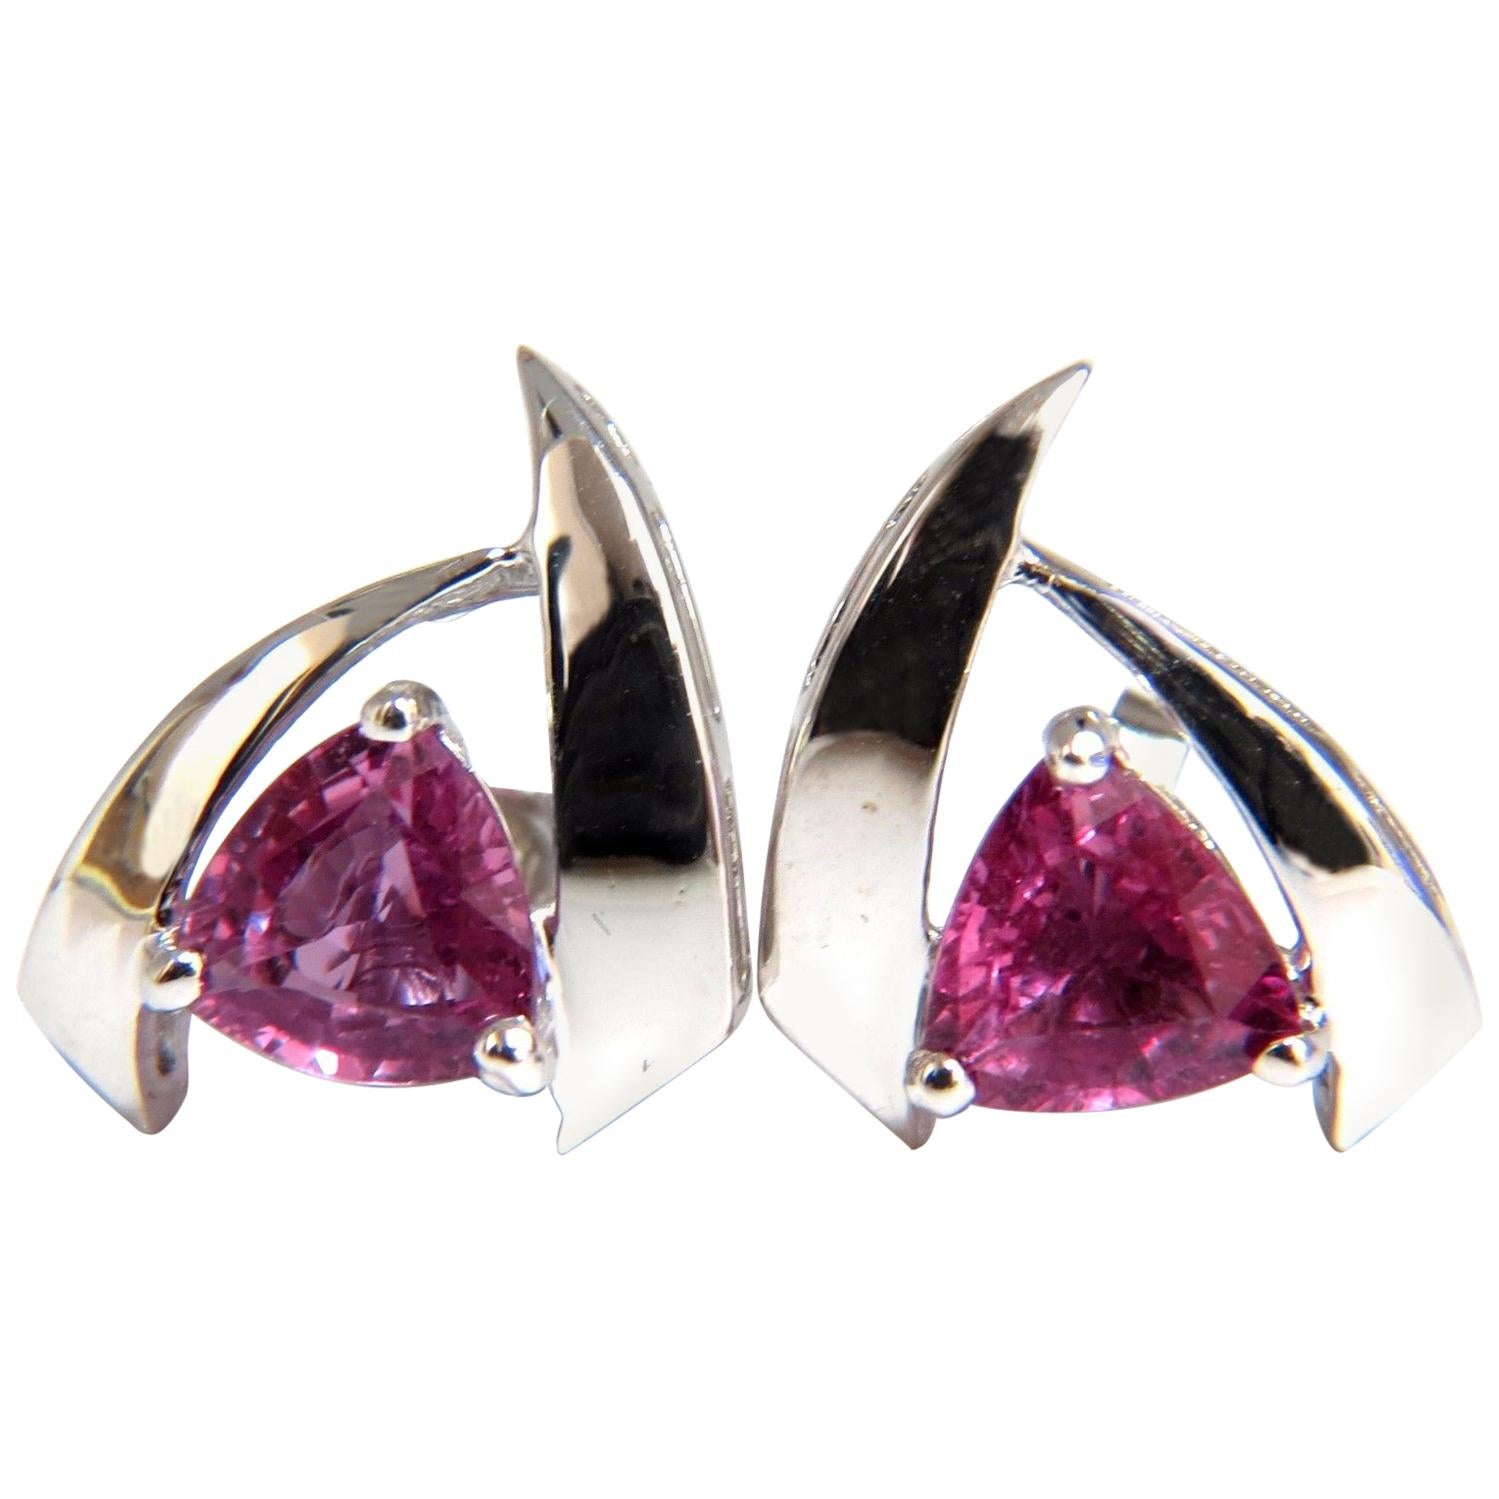 2.18 Carat Natural Pink Trilliant Sapphire Stud Earrings 14 Karat